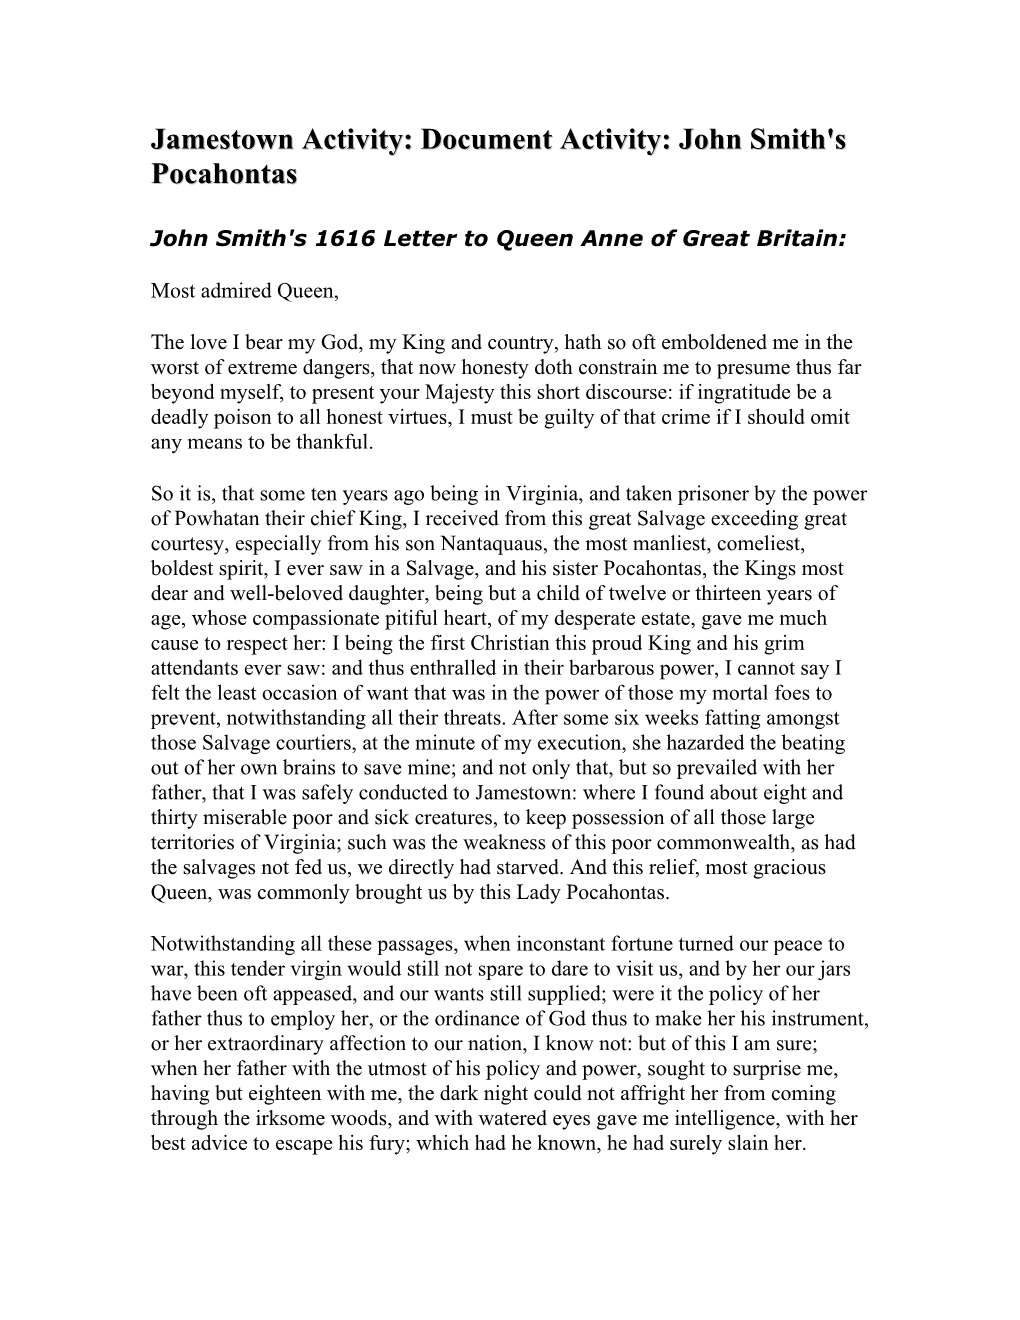 Jamestown Activity: Document Activity: John Smith's Pocahontas